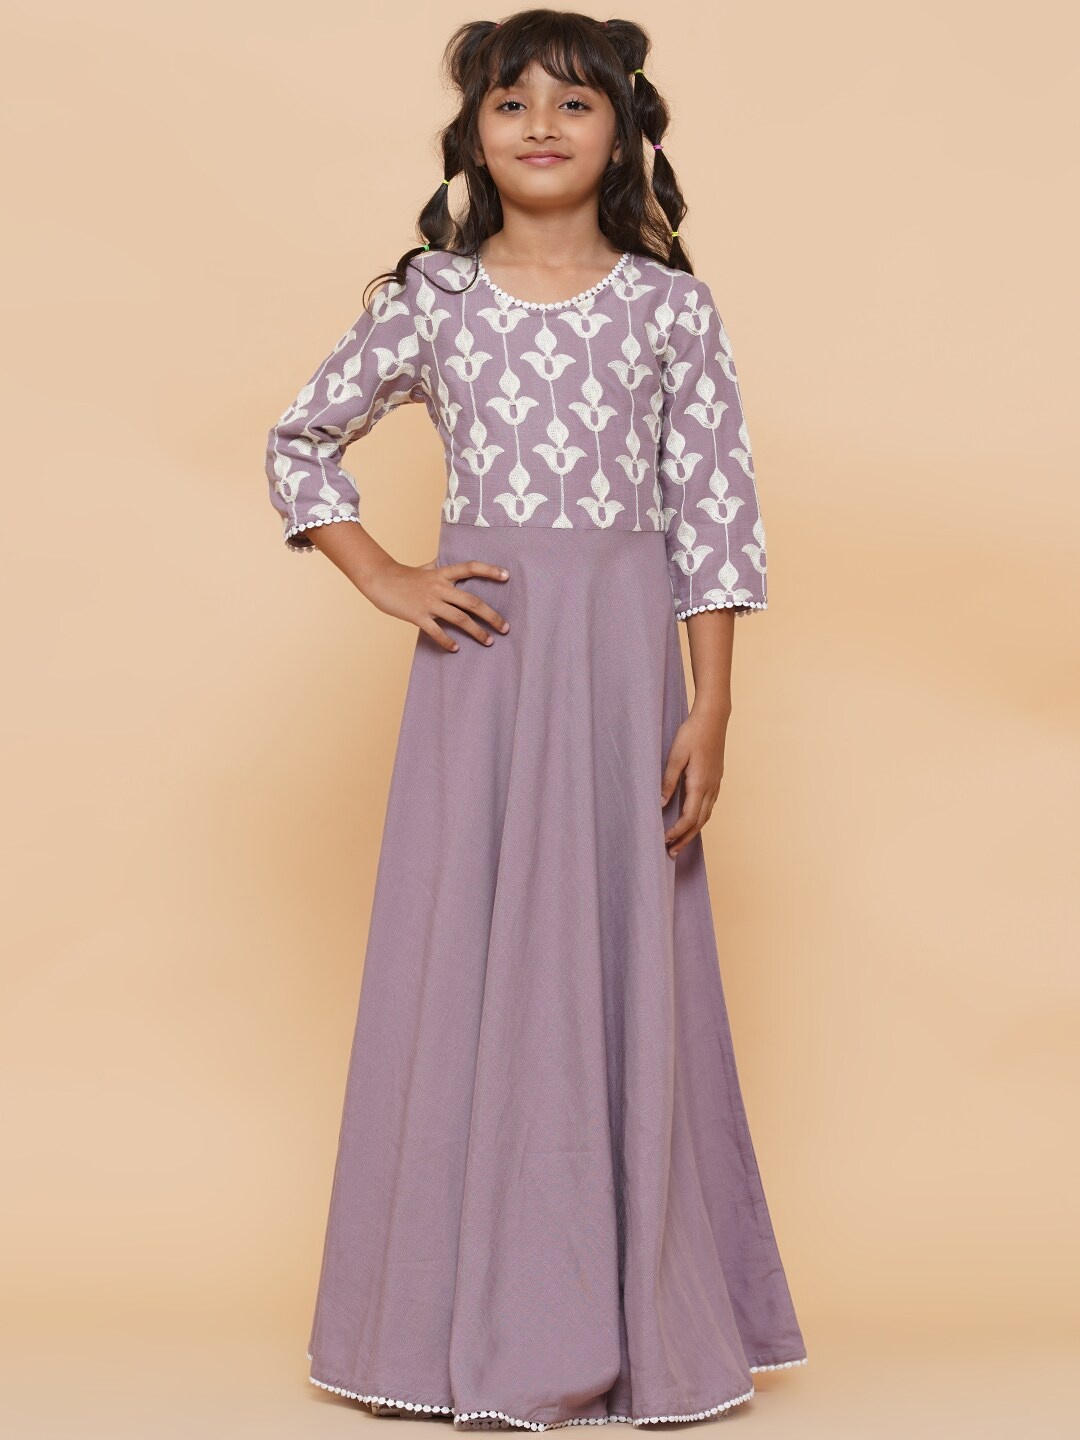 

titliyan Girls Lavender Floral Embroidered Viscose Rayon Flared Maxi Dress